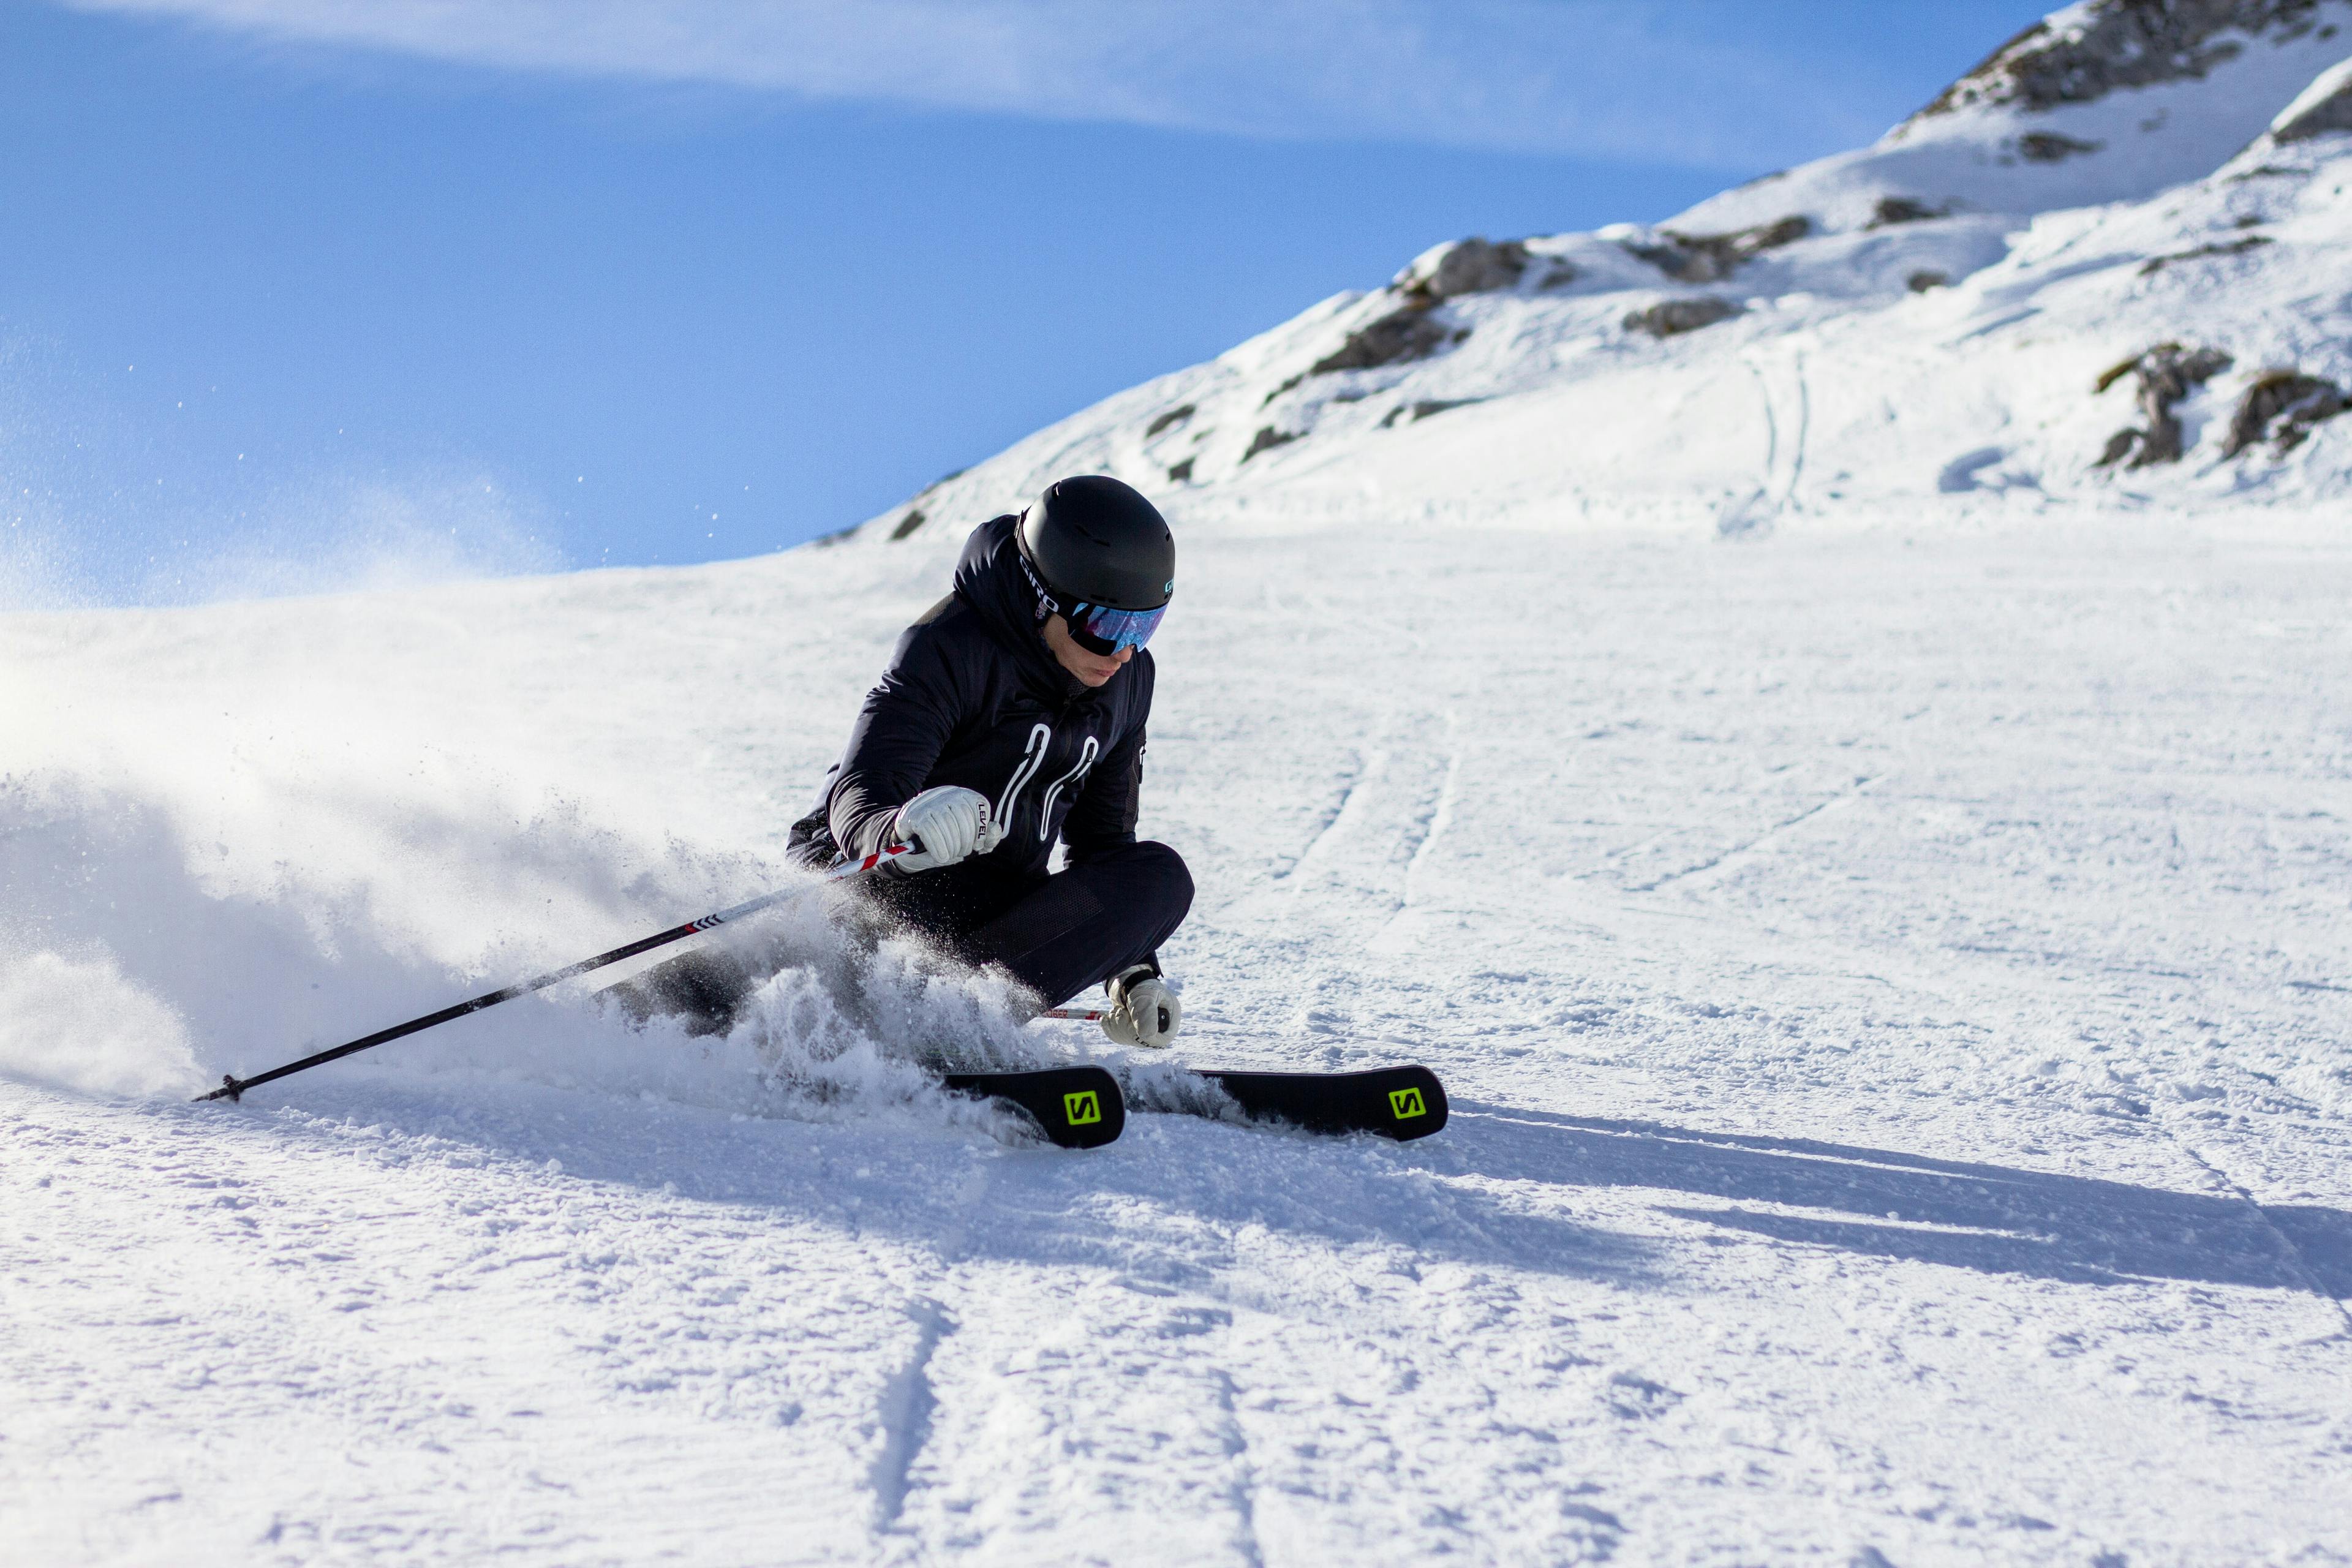 Skier carving turn on slope